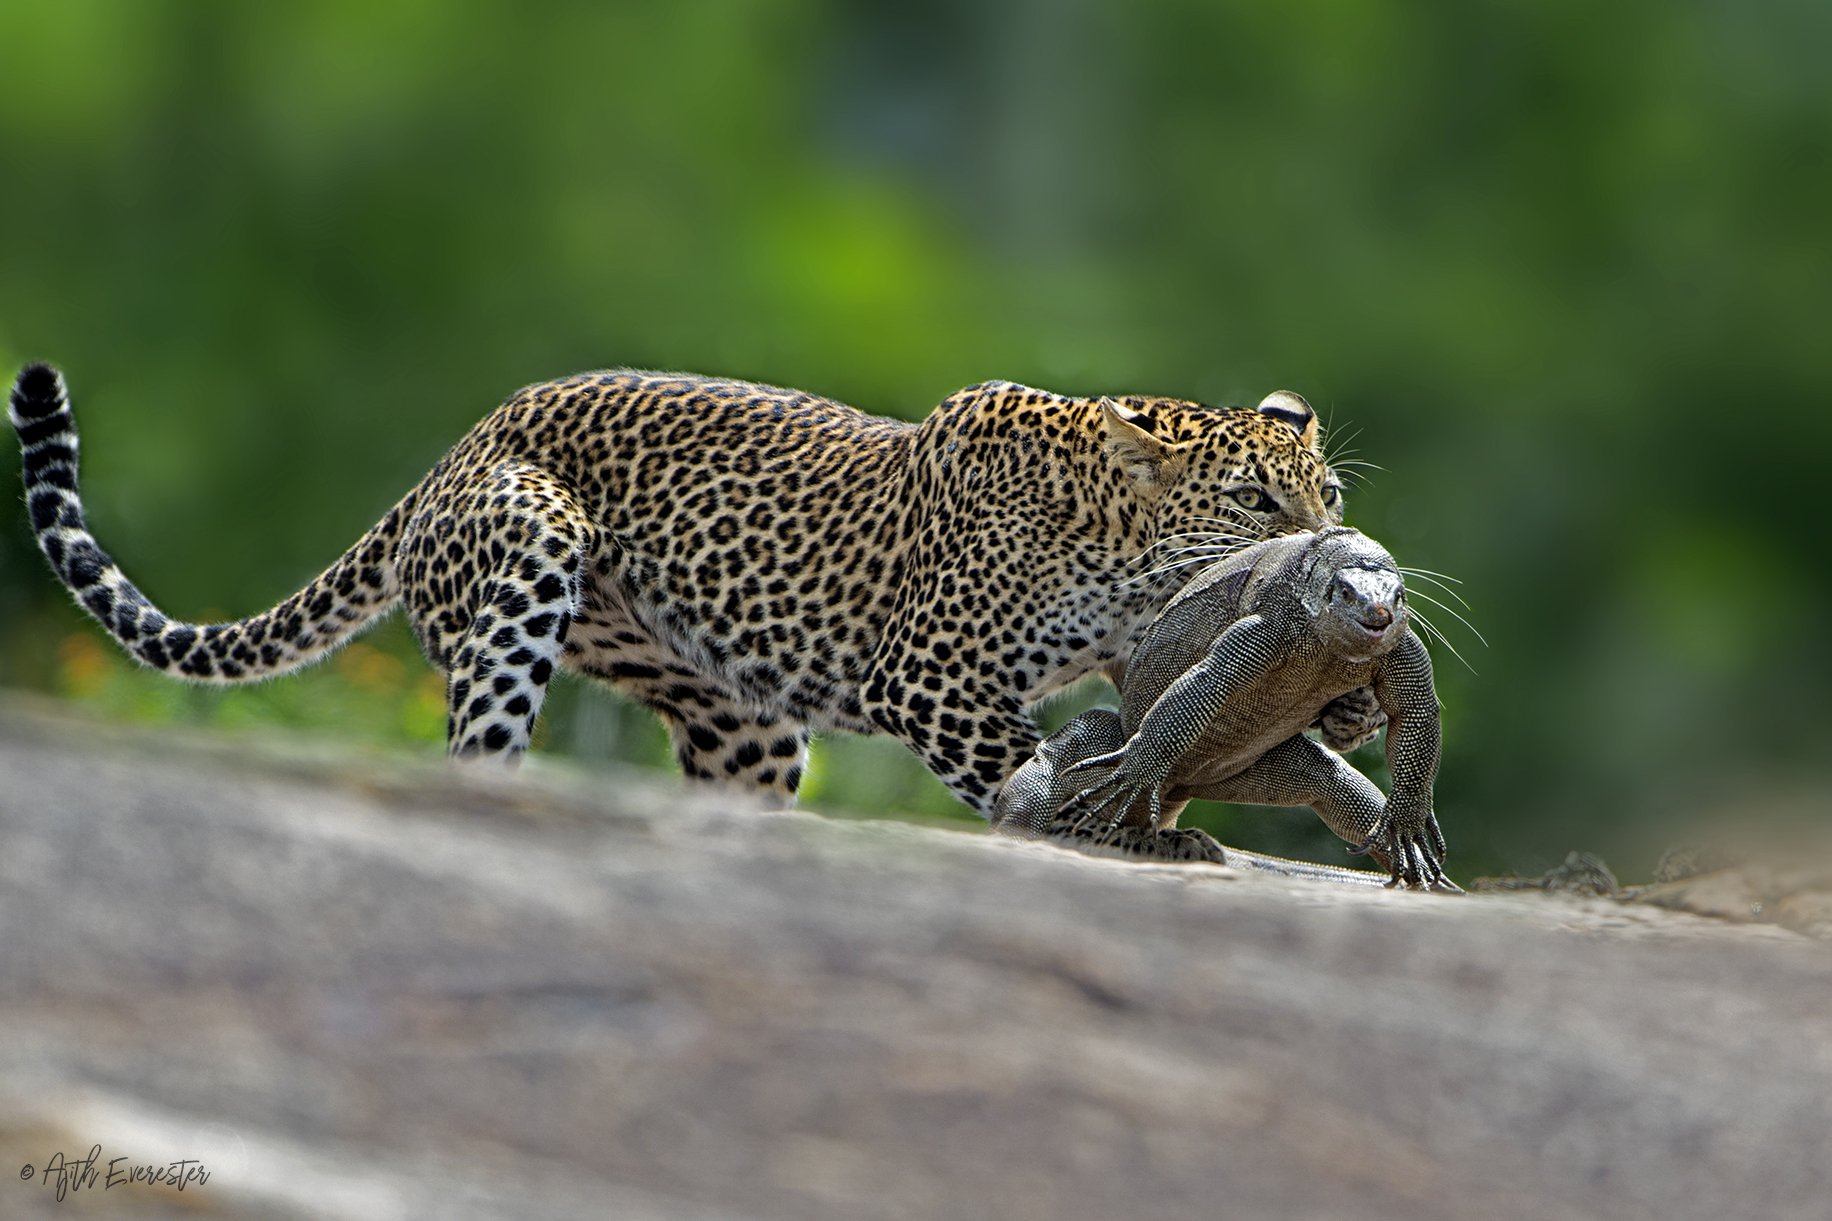 Leopard, Monitor Lizard, Srilanka, Yala, Hunting, Ajith Everester